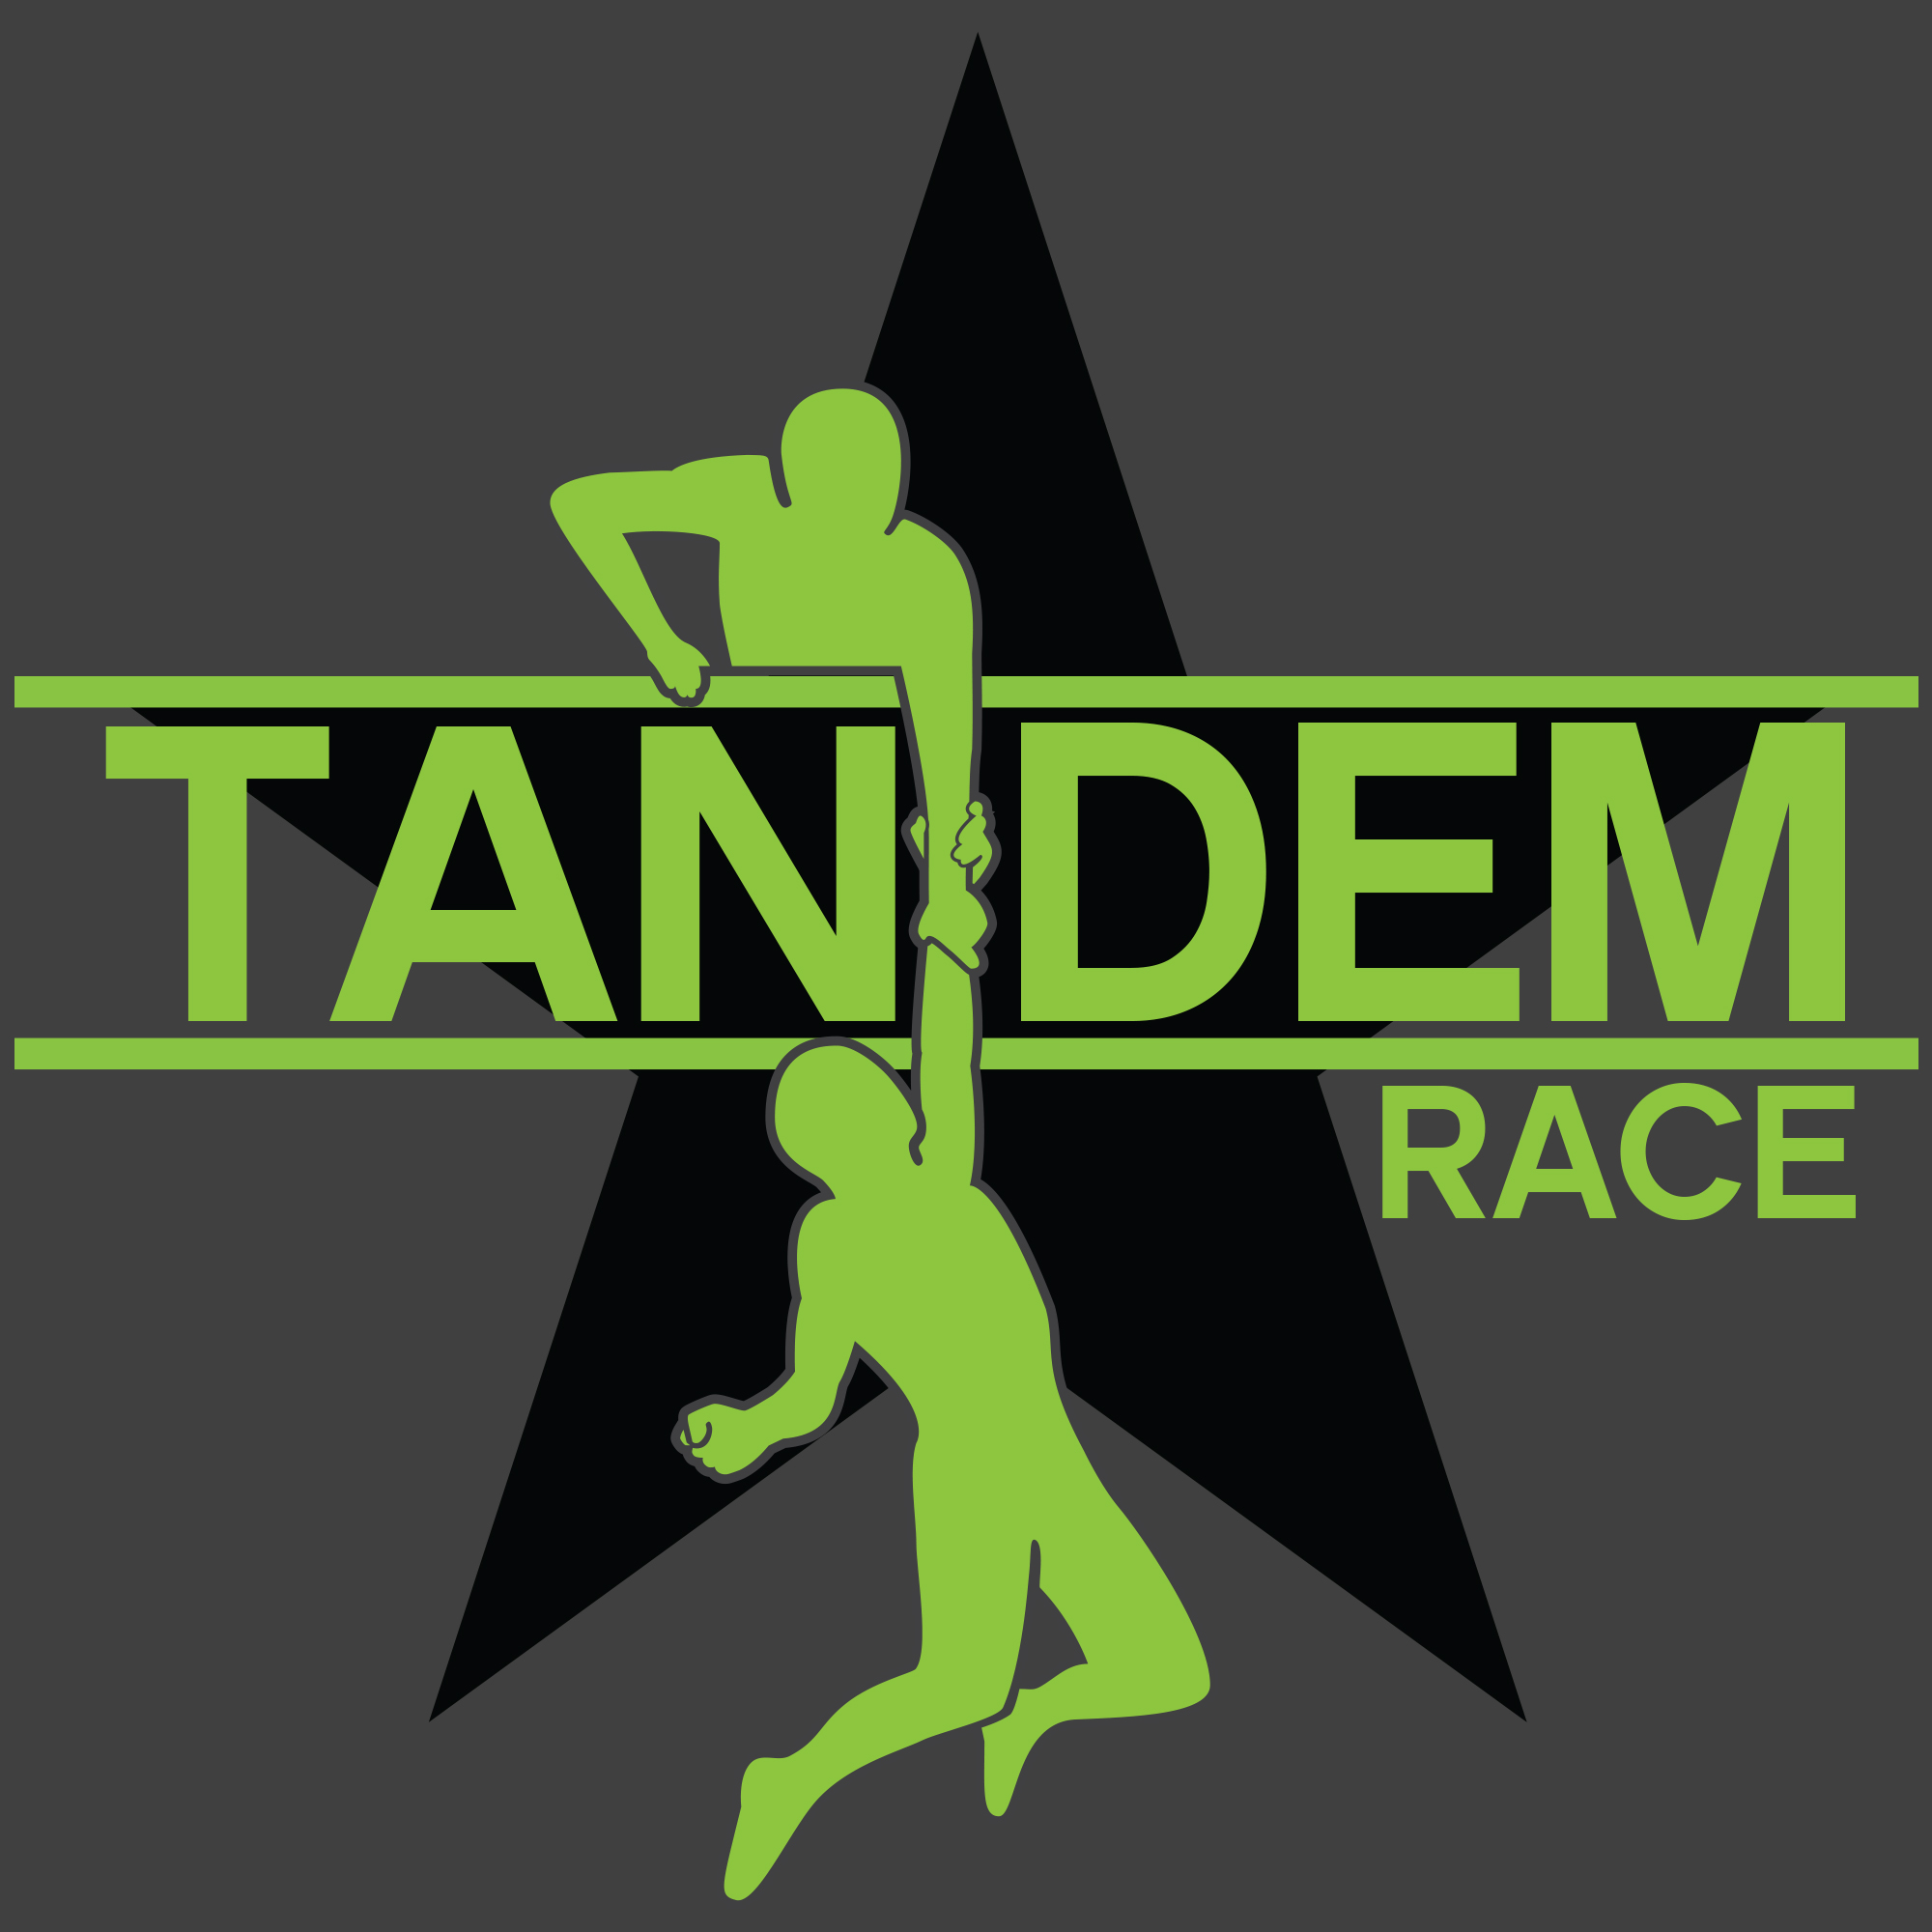 Tandem Race